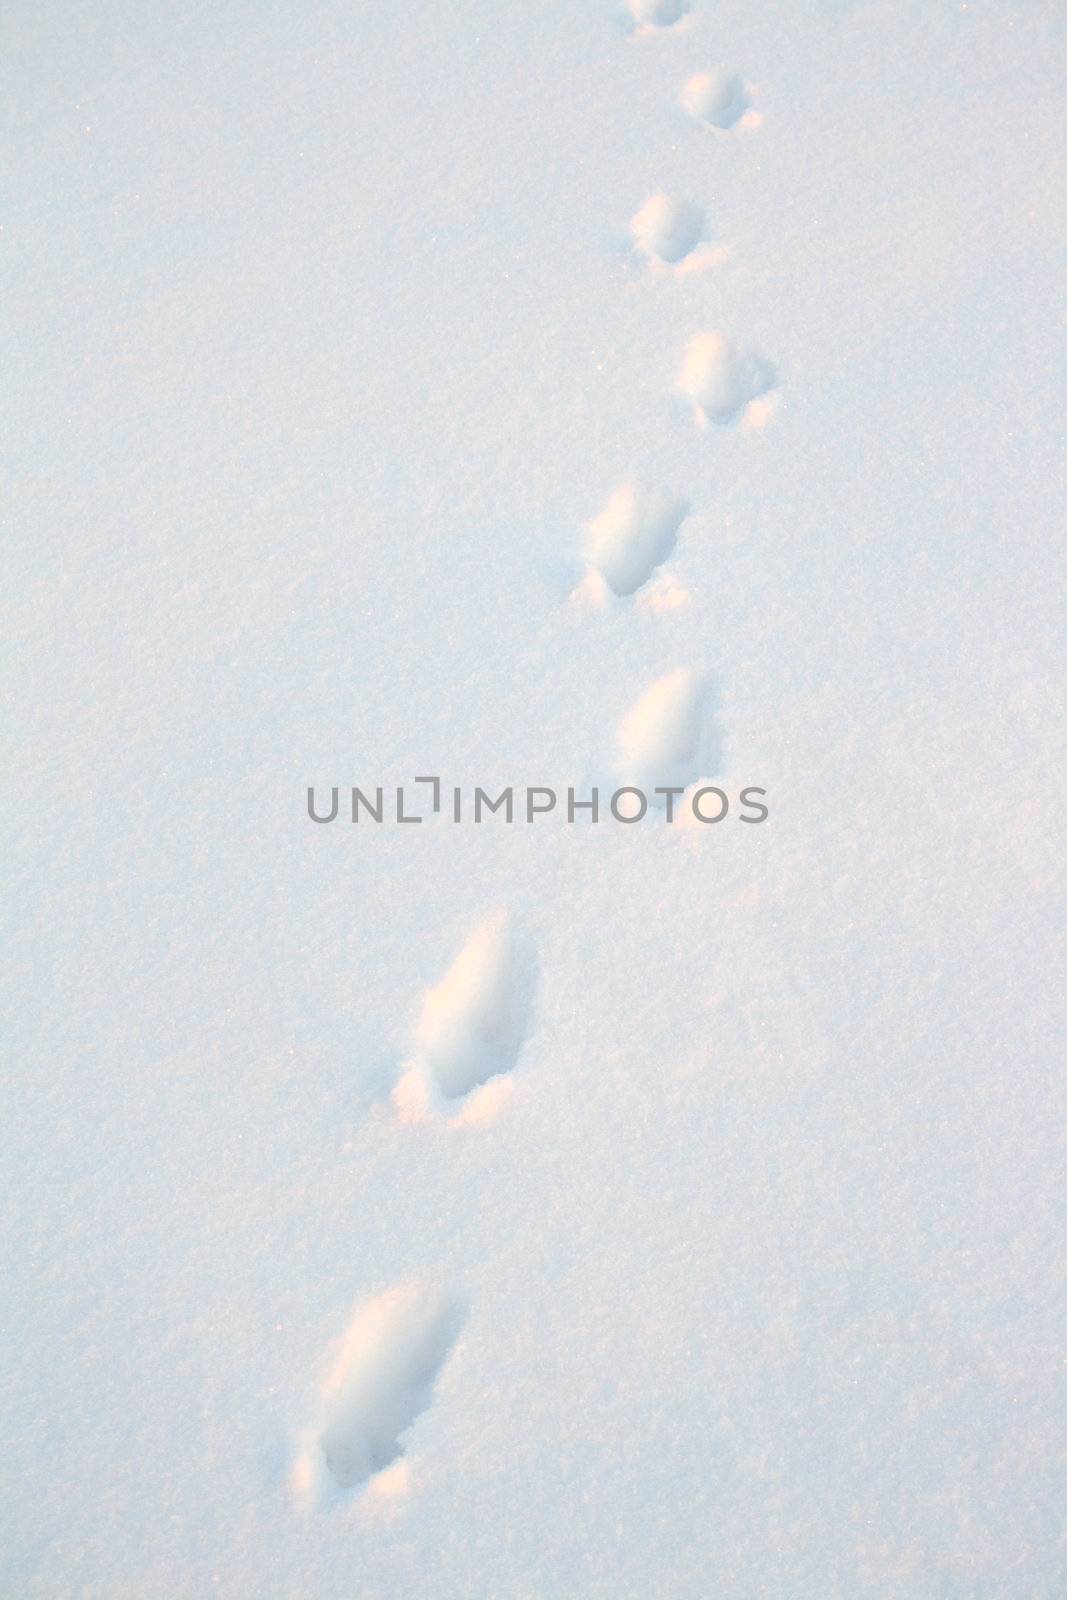 animal tracks on snow in field